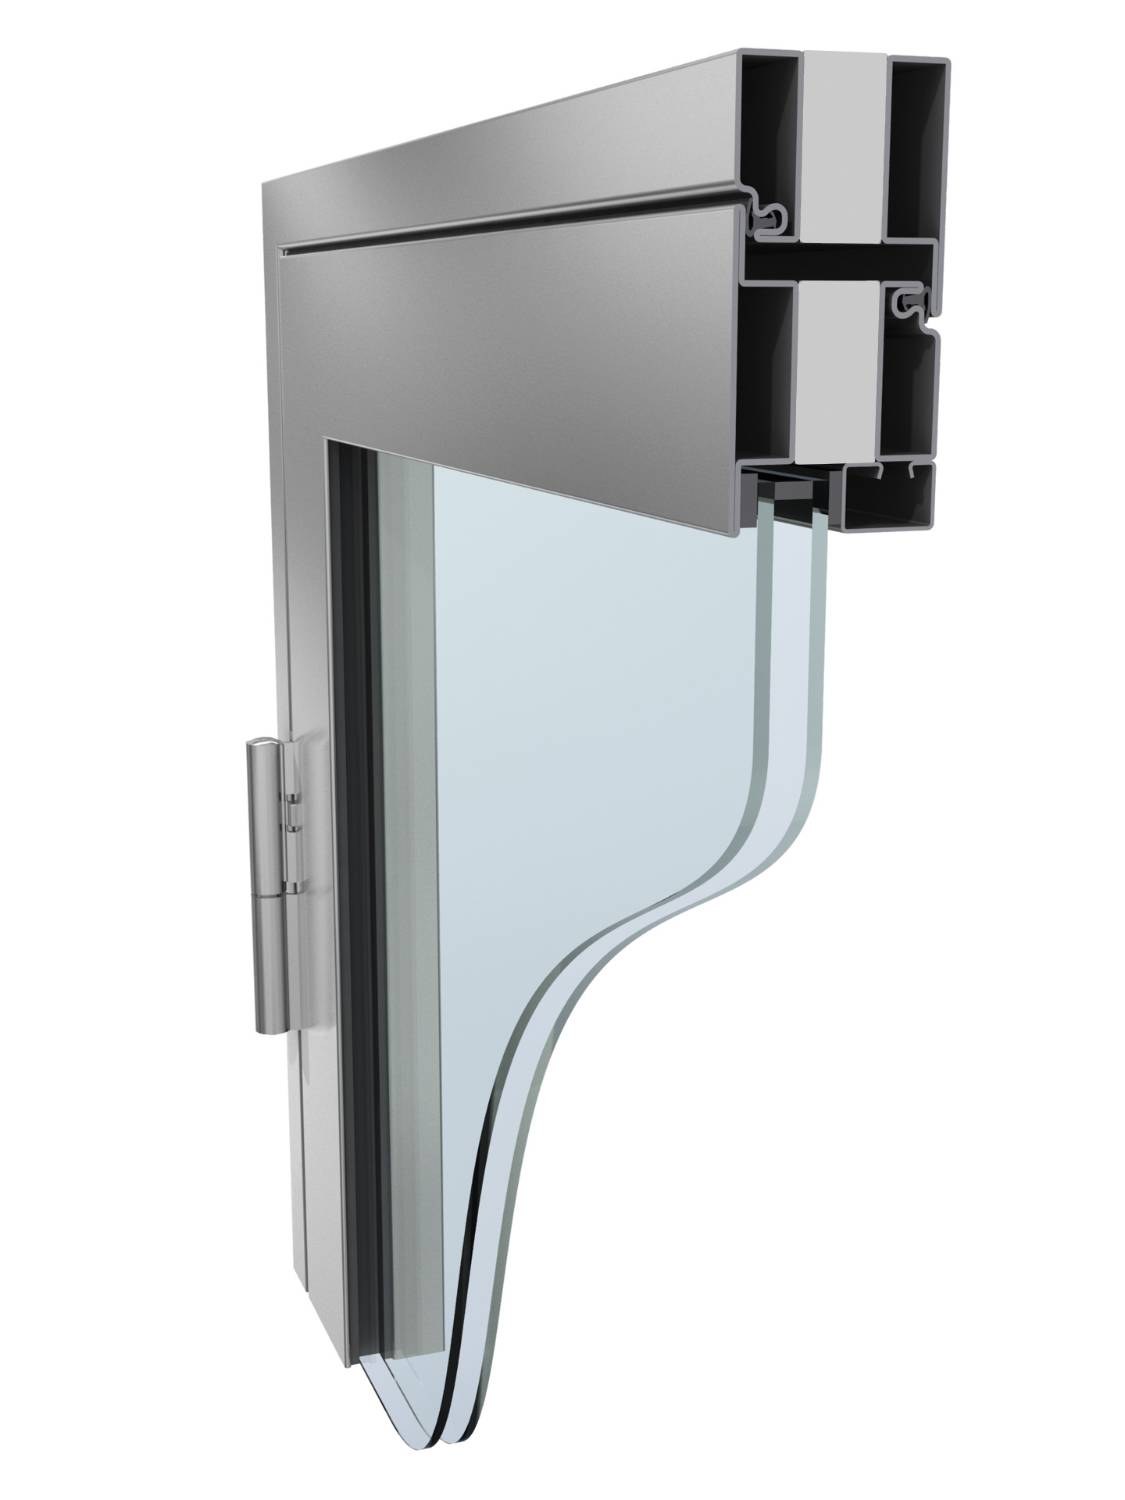 Traffidor Clear - Fully Glazed Steel Door System (Stainless Steel)